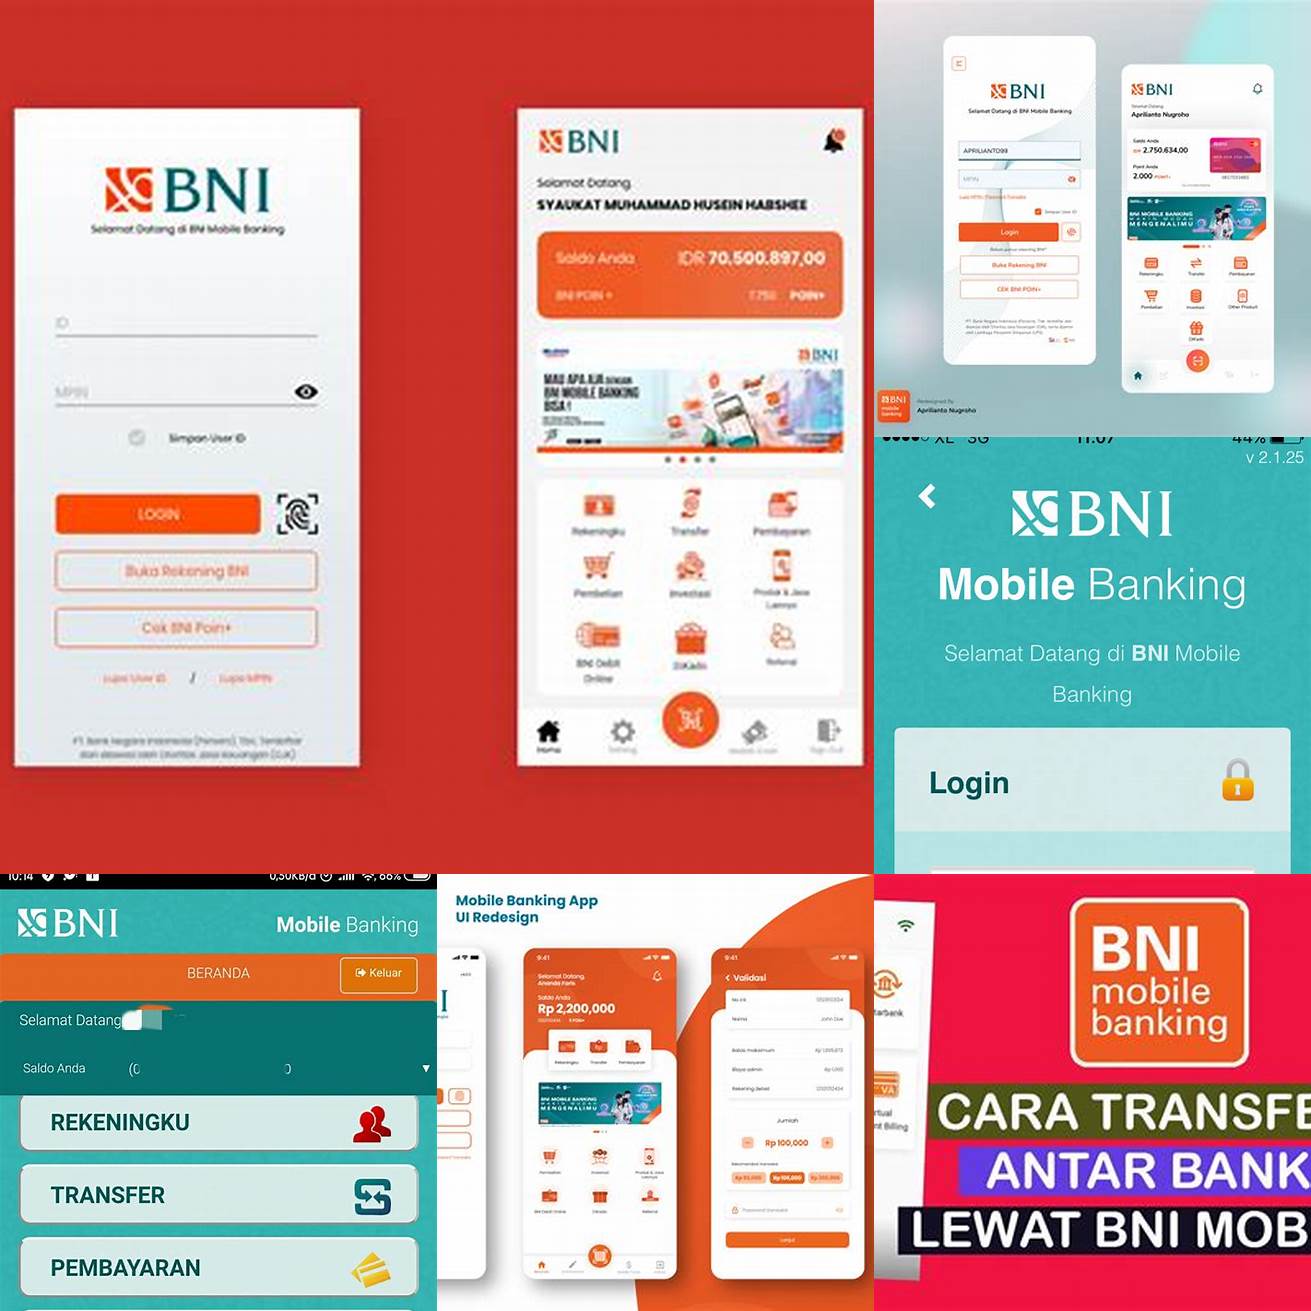 Masuk ke aplikasi BNI Mobile Banking